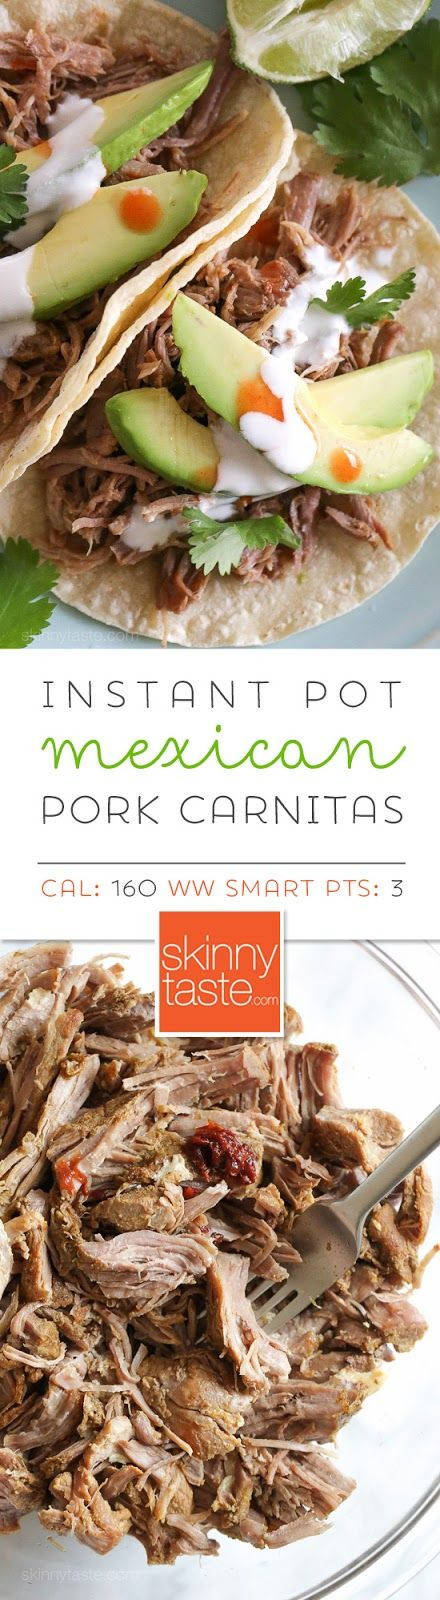 Skinnytaste Instant Pot Recipes
 62 best Skinny Instant Pot Pressure Cooker Recipes